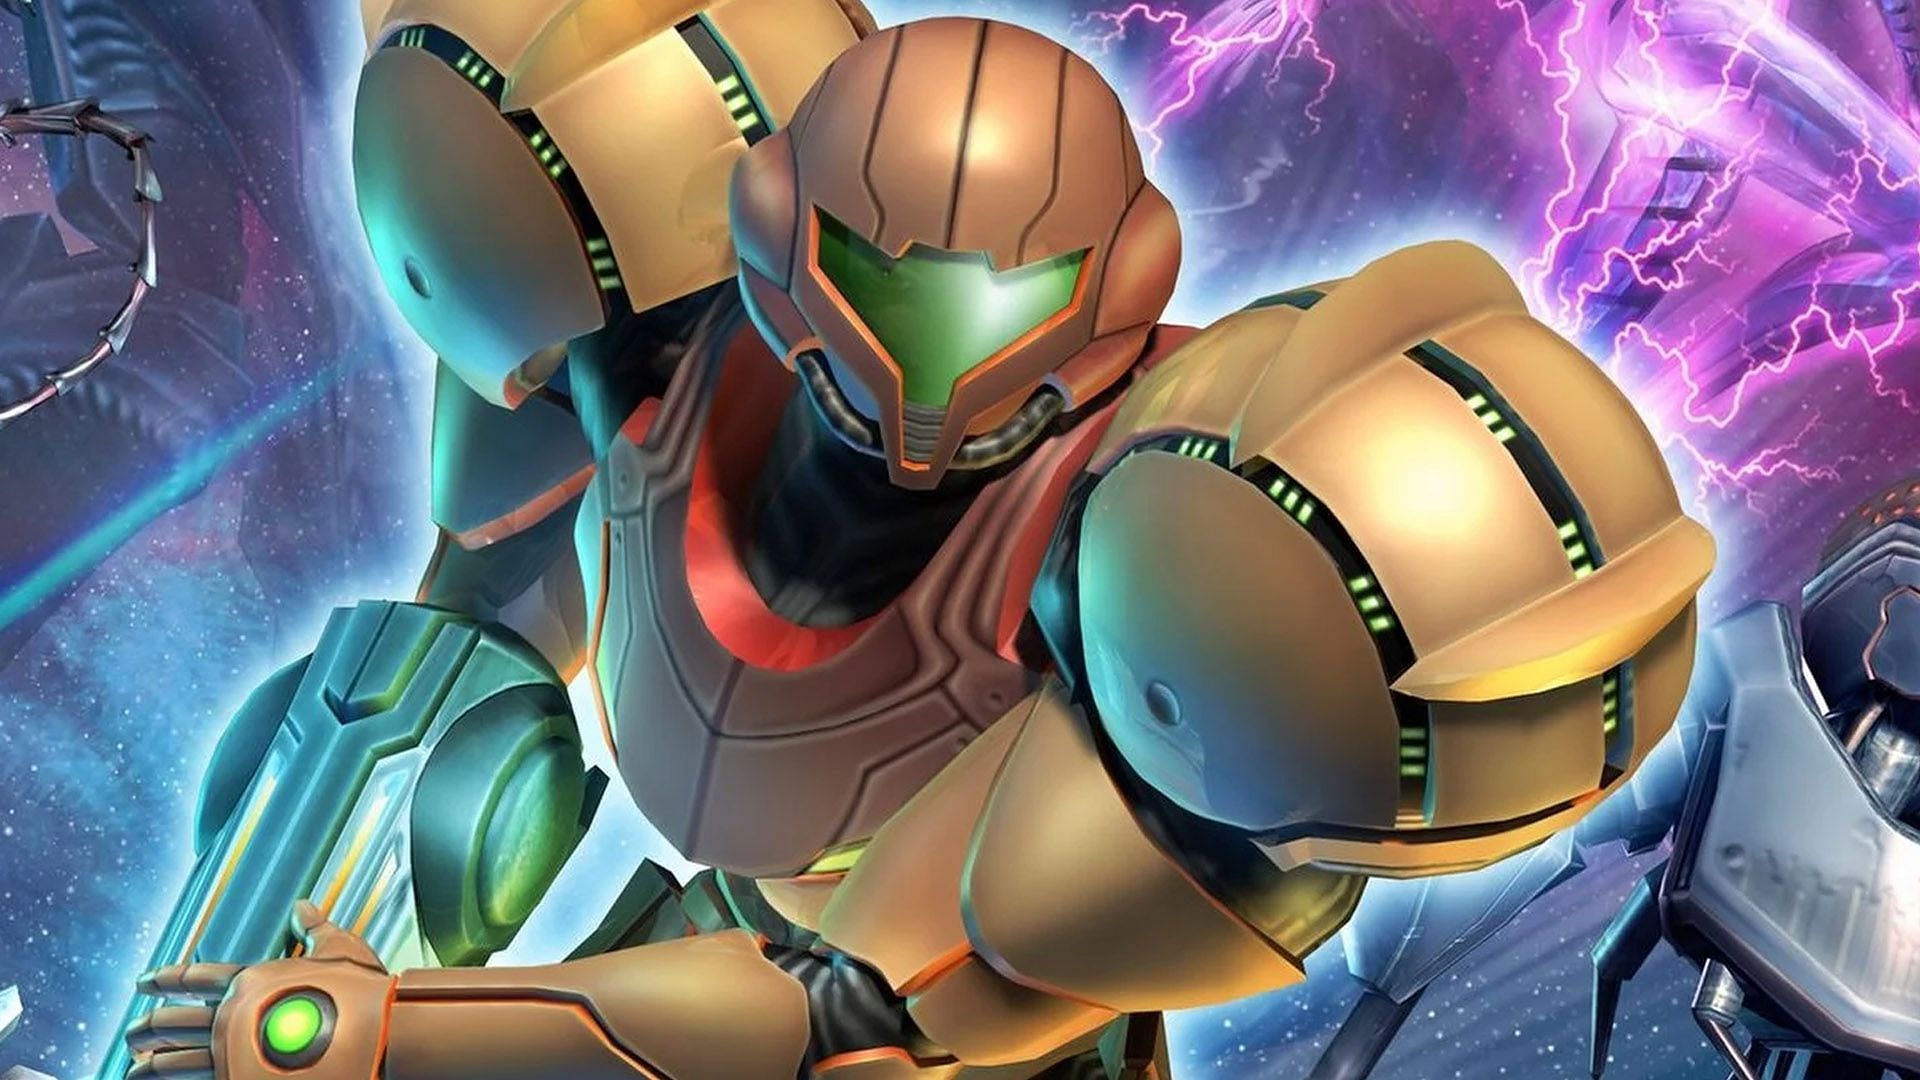 Samus Aran in her Power Suit (Image via Nintendo)